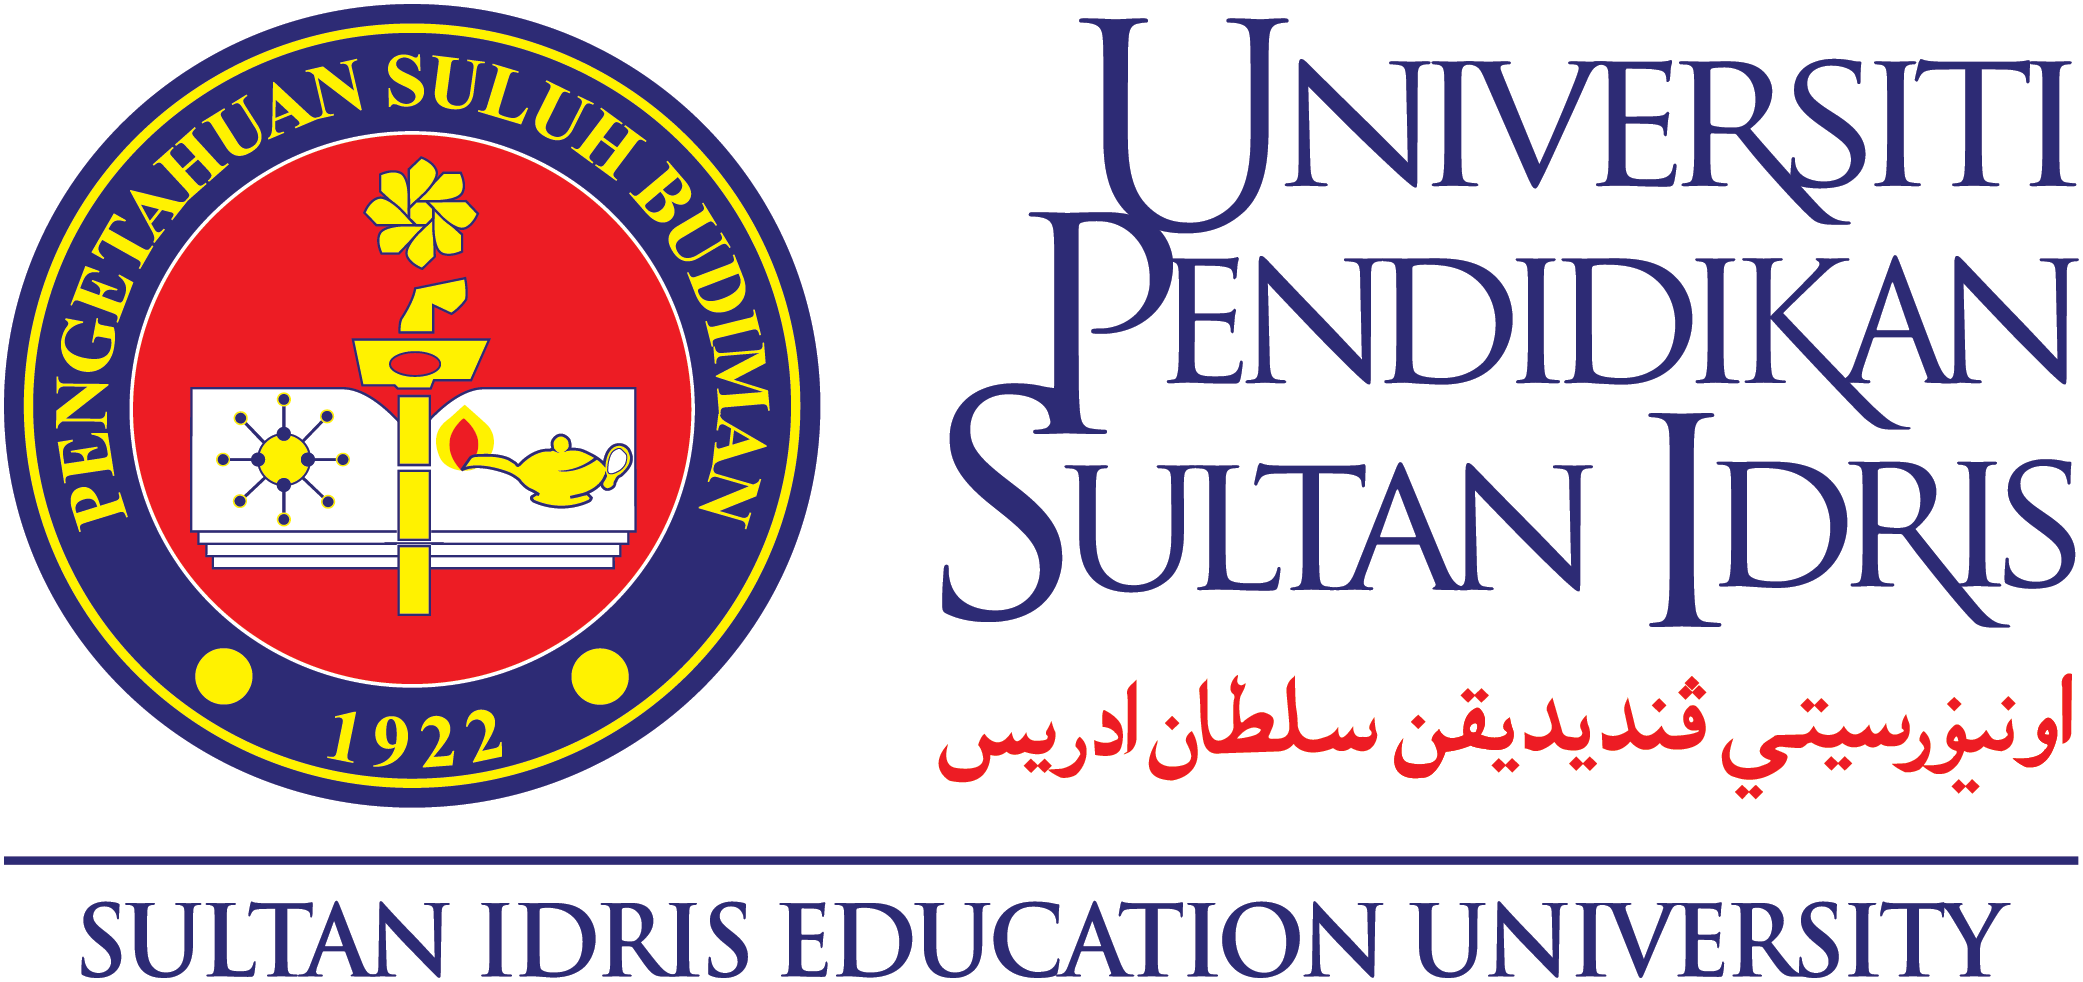 Universiti Pendidikan Sultan Idris Official